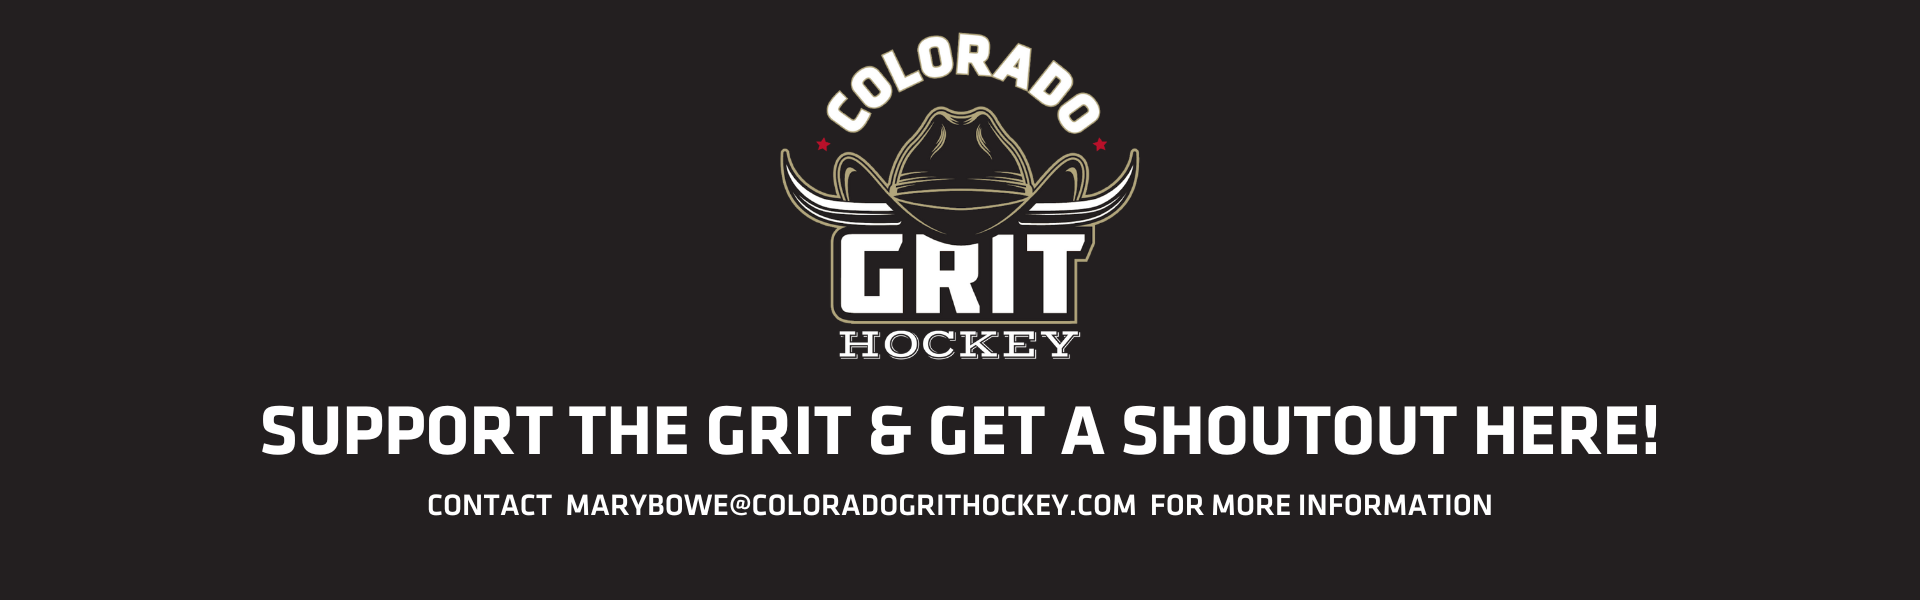 Colorado Grit Sponsor